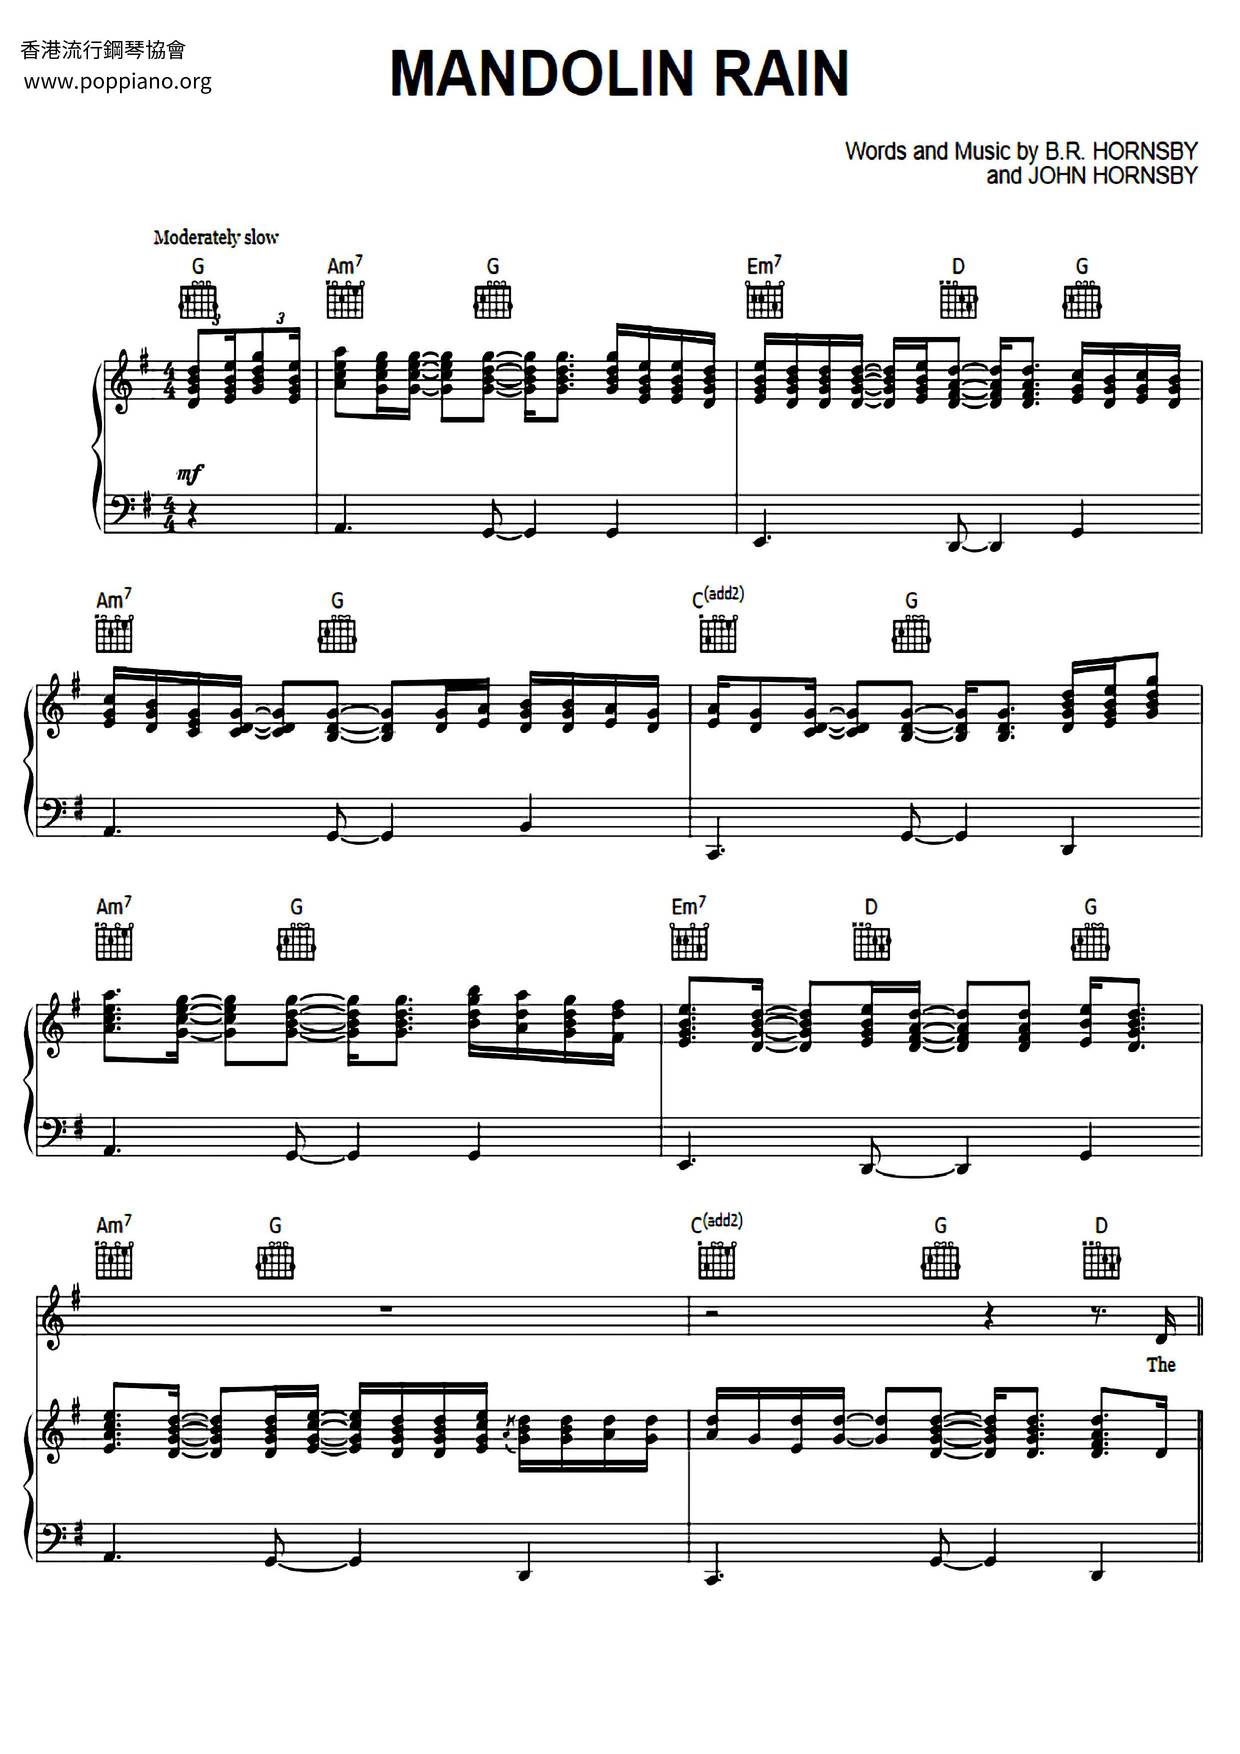 Mandolin Rain Score